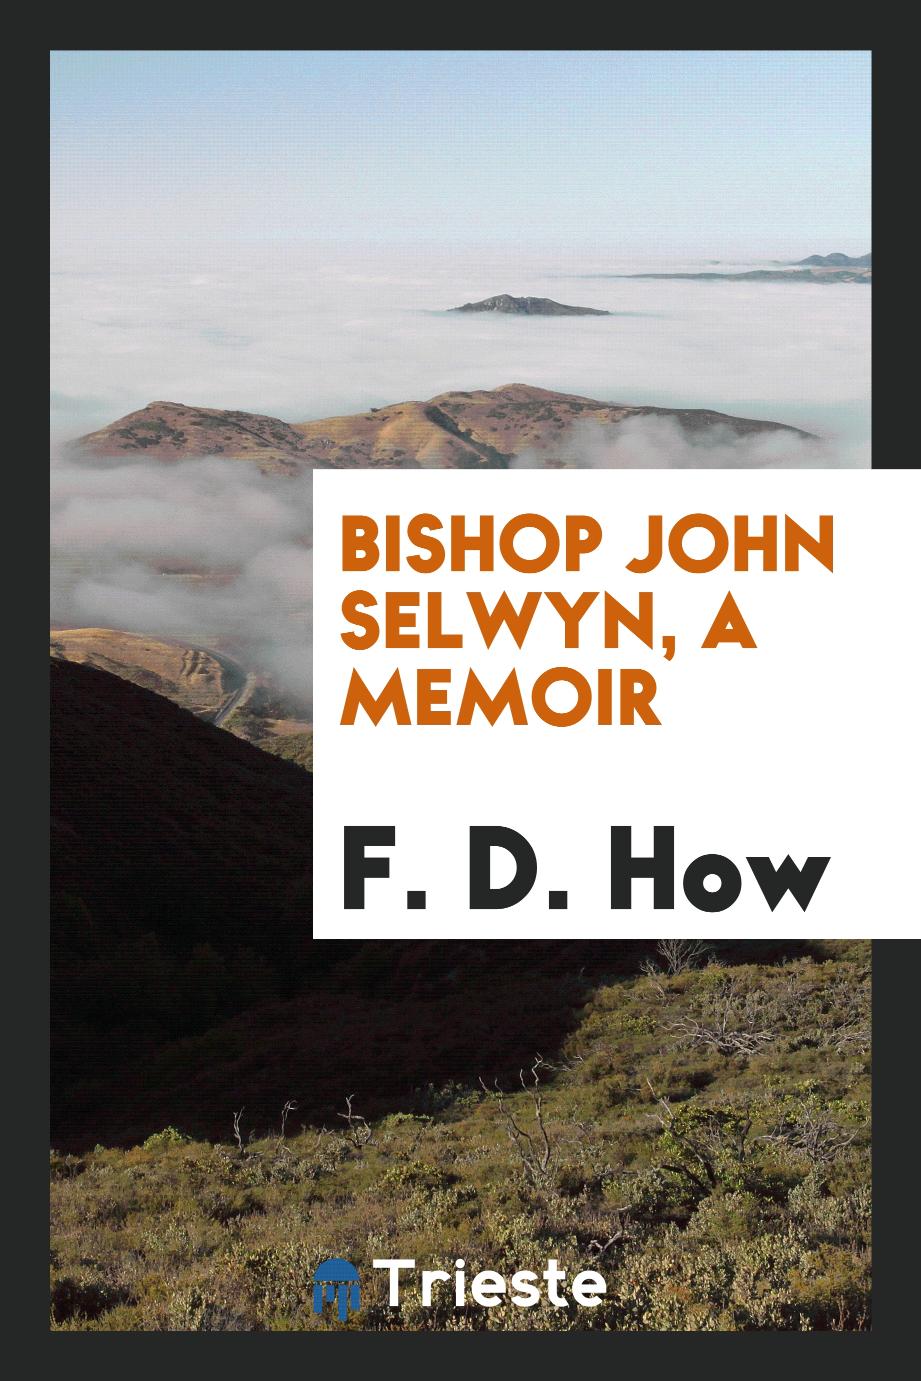 Bishop John Selwyn, a memoir